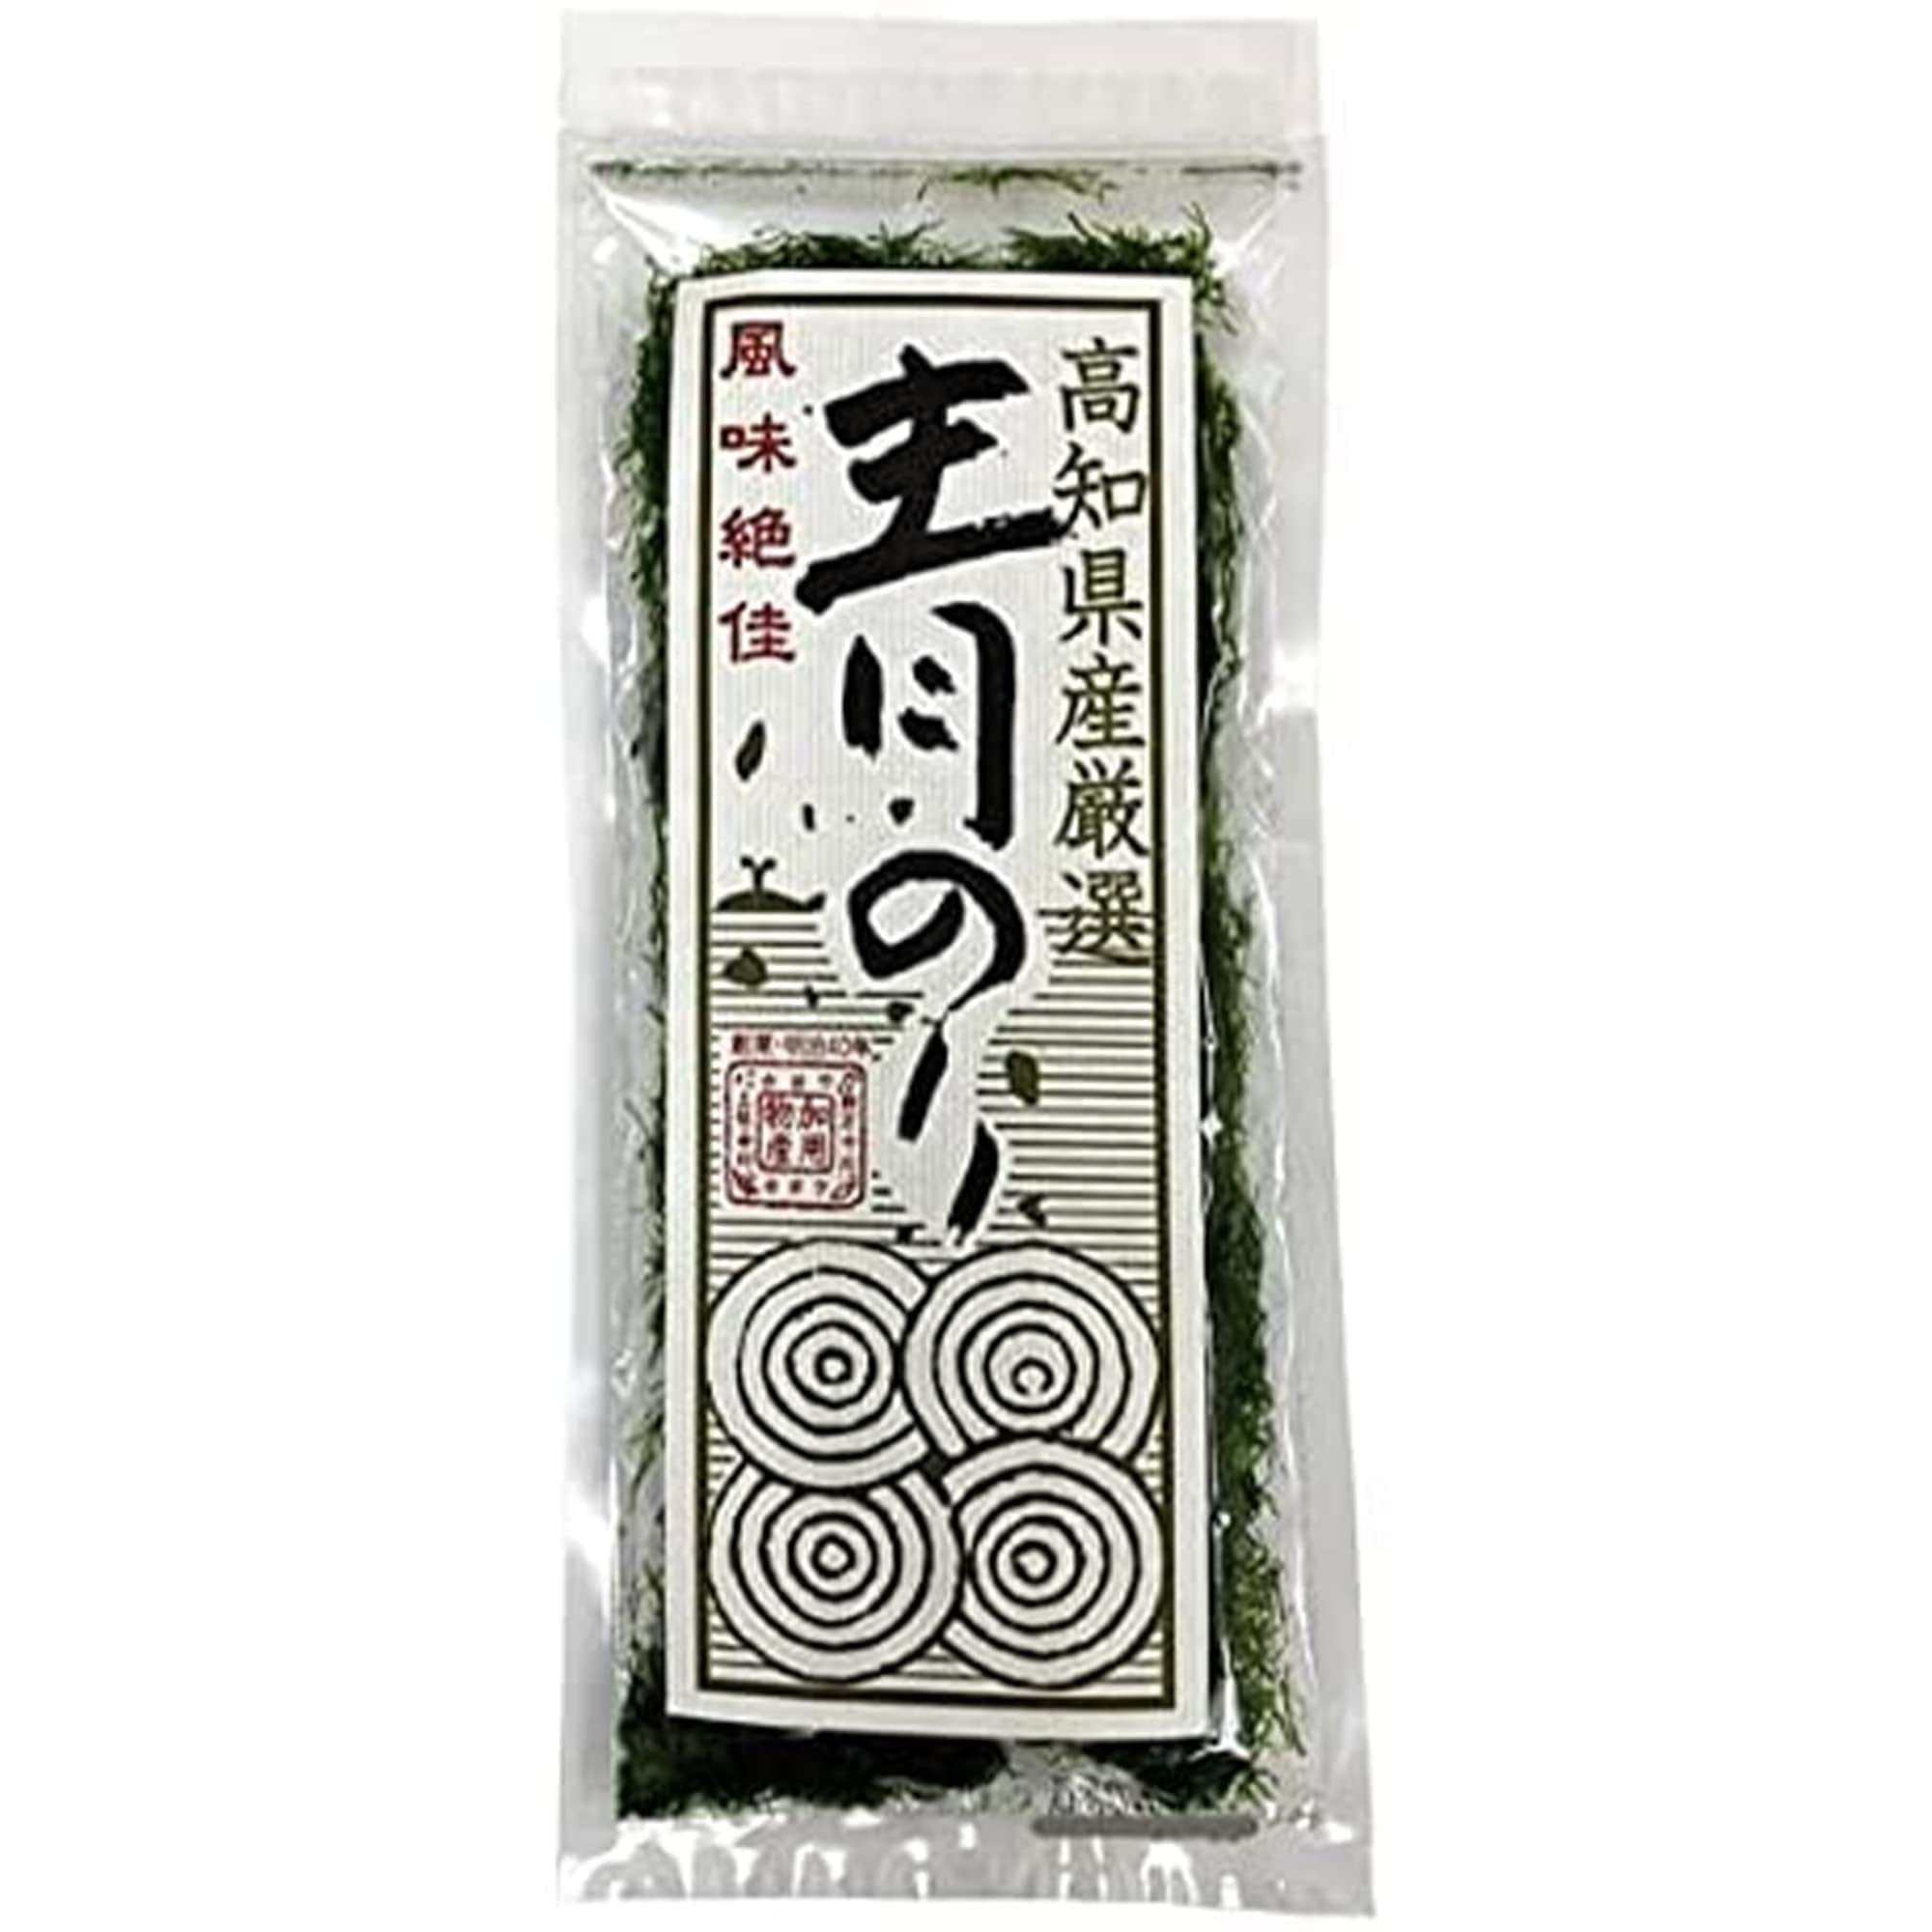 Aonori-Japanese-Green-Laver-Seaweed-Strands-10g-1-2023-11-14T06:42:02.844Z.jpg